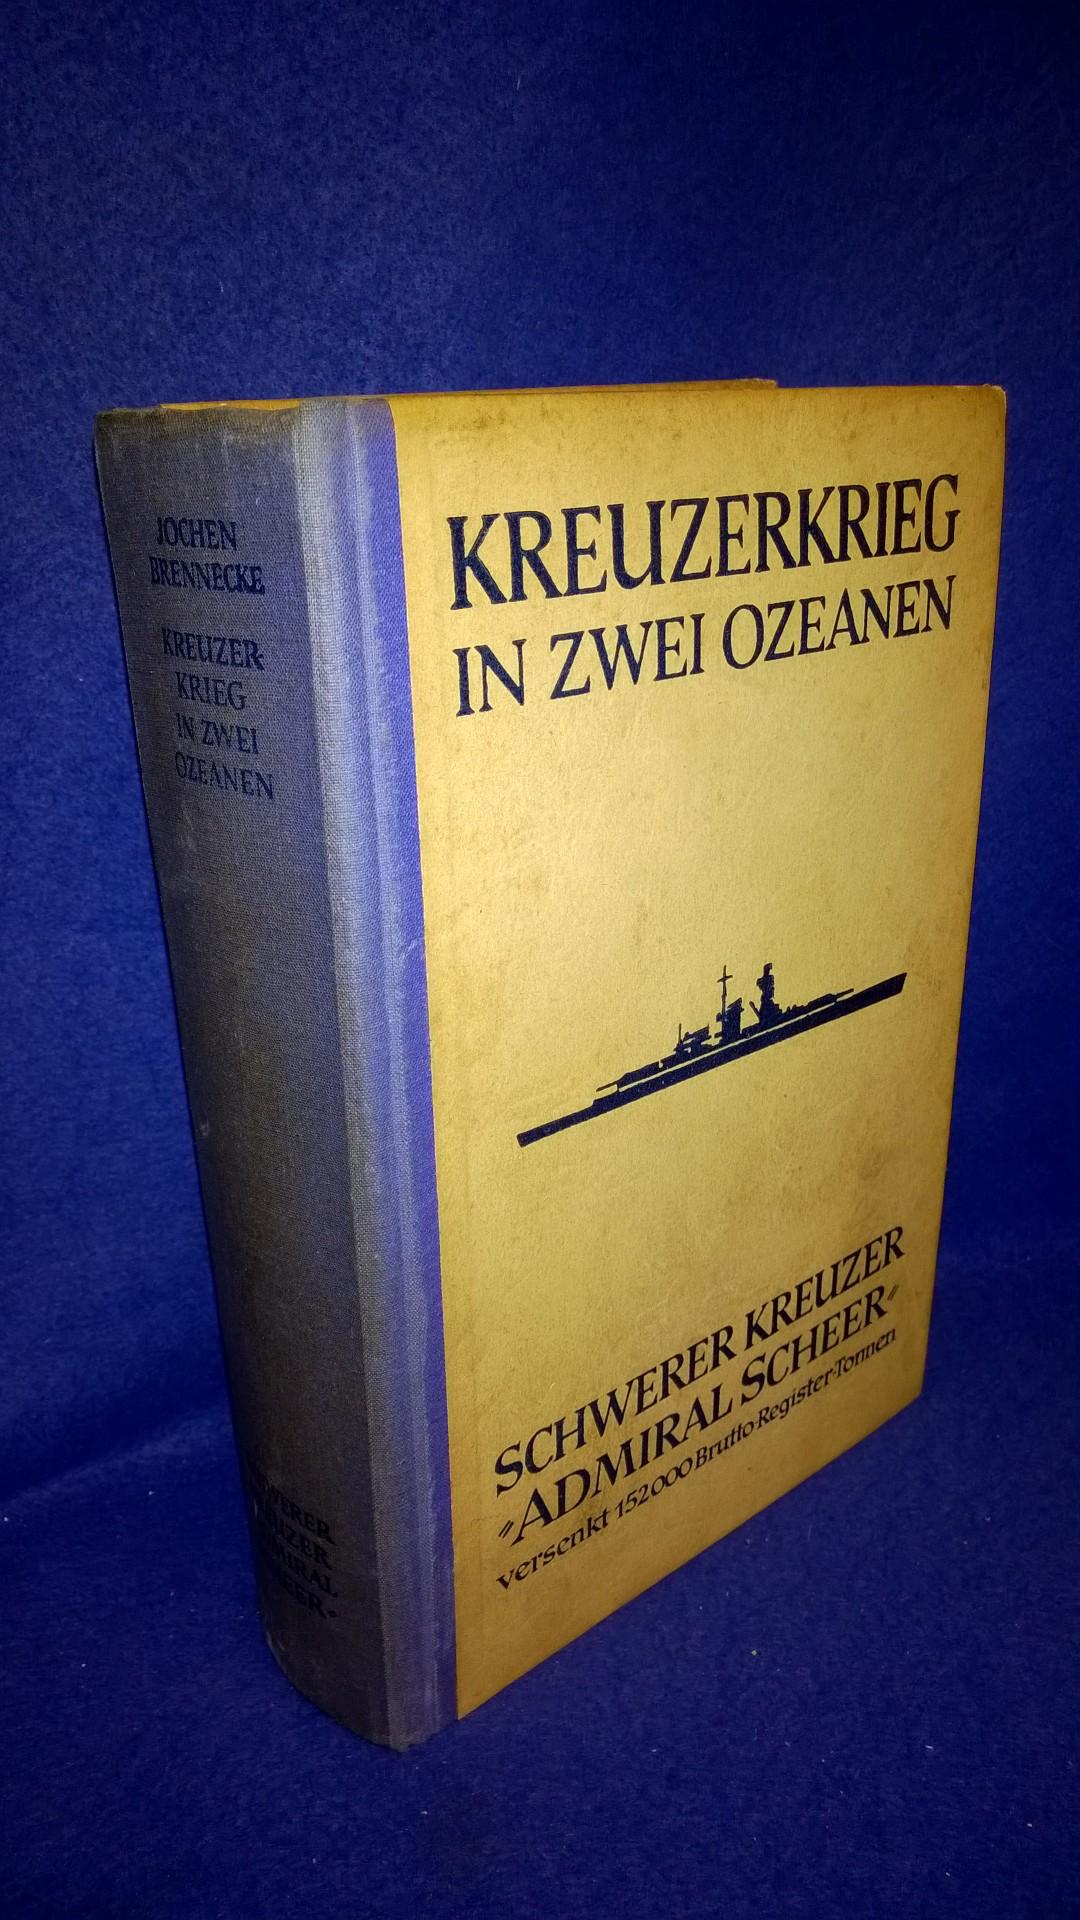 Kreuzerkrieg in zwei Ozeanen. Schwerer Kreuzer "Admiral Scheer" versenkt 152000 Brutto-Register-Tonnen.